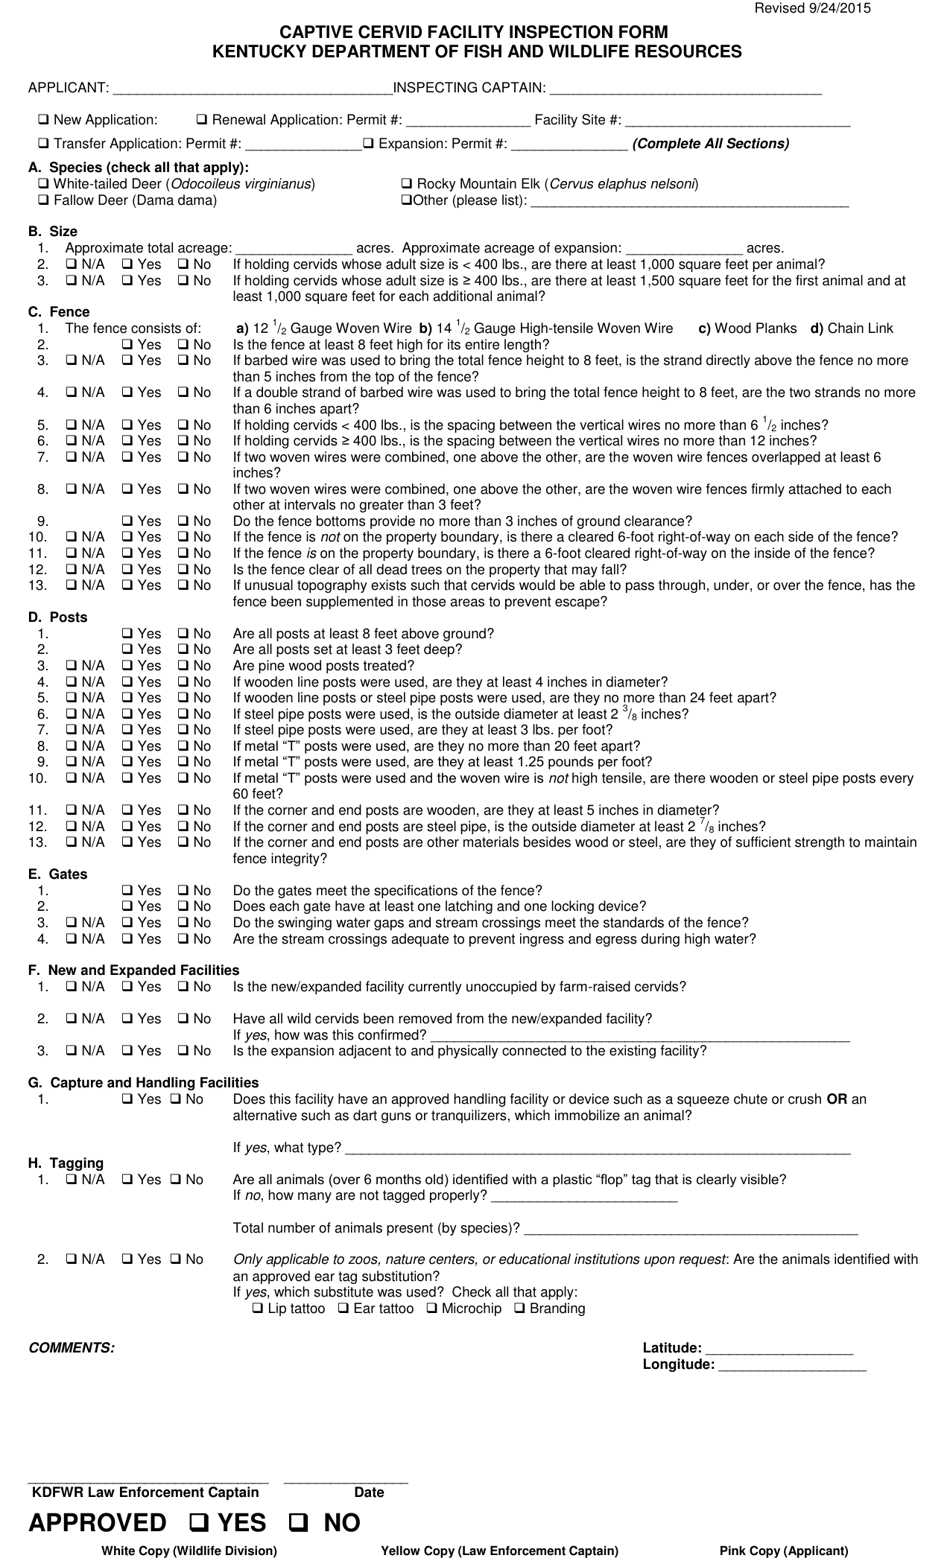 Captive Cervid Facility Inspection Form - Kentucky, Page 1